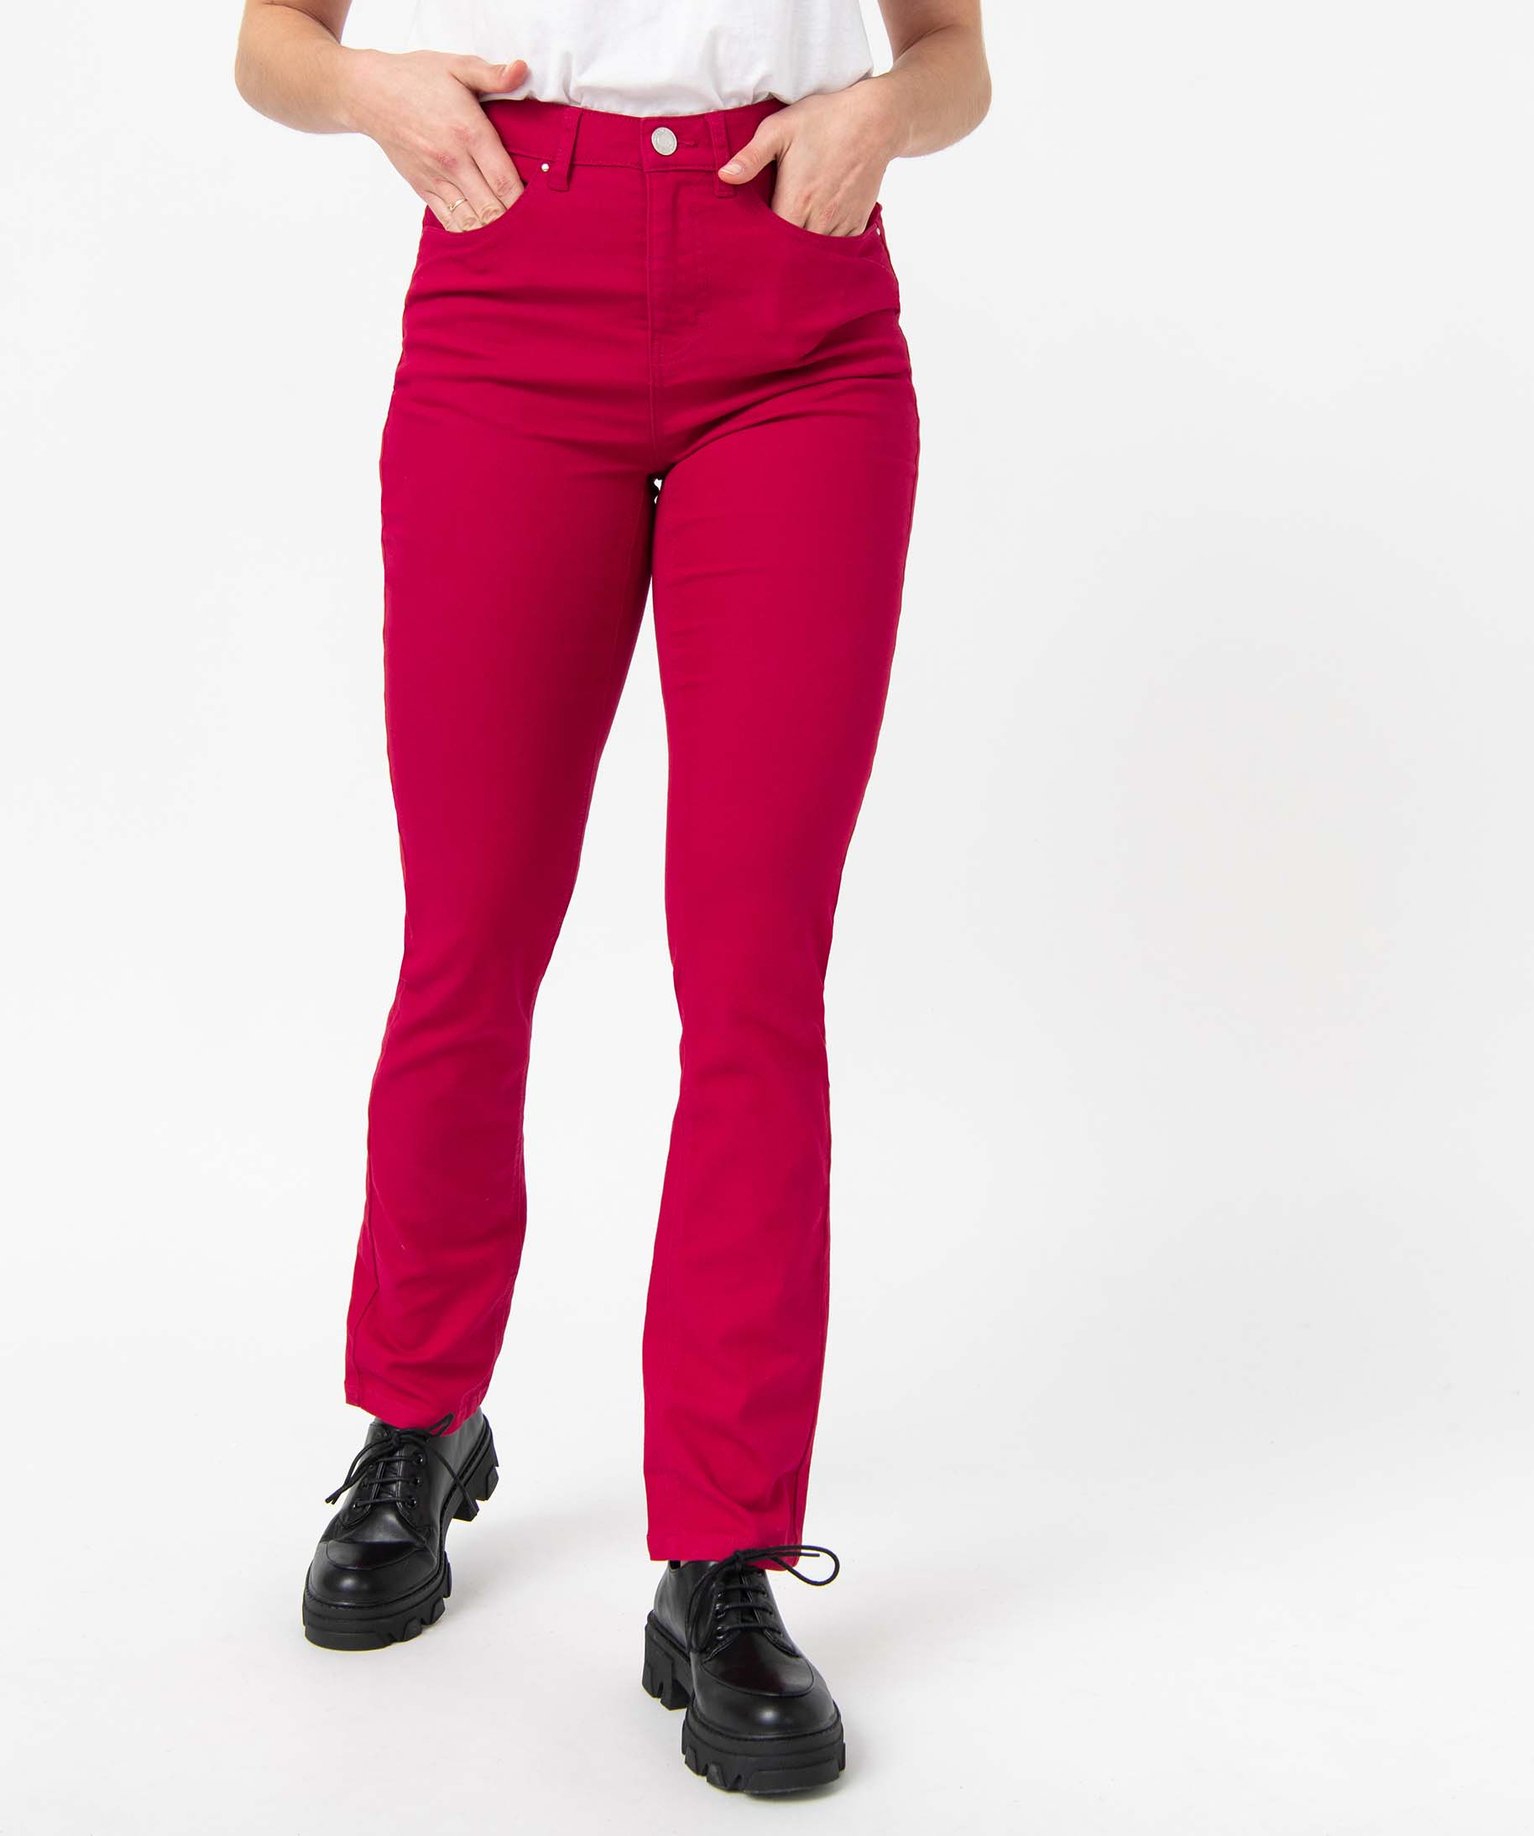 pantalon femme coupe regular taille normale rouge pantalons